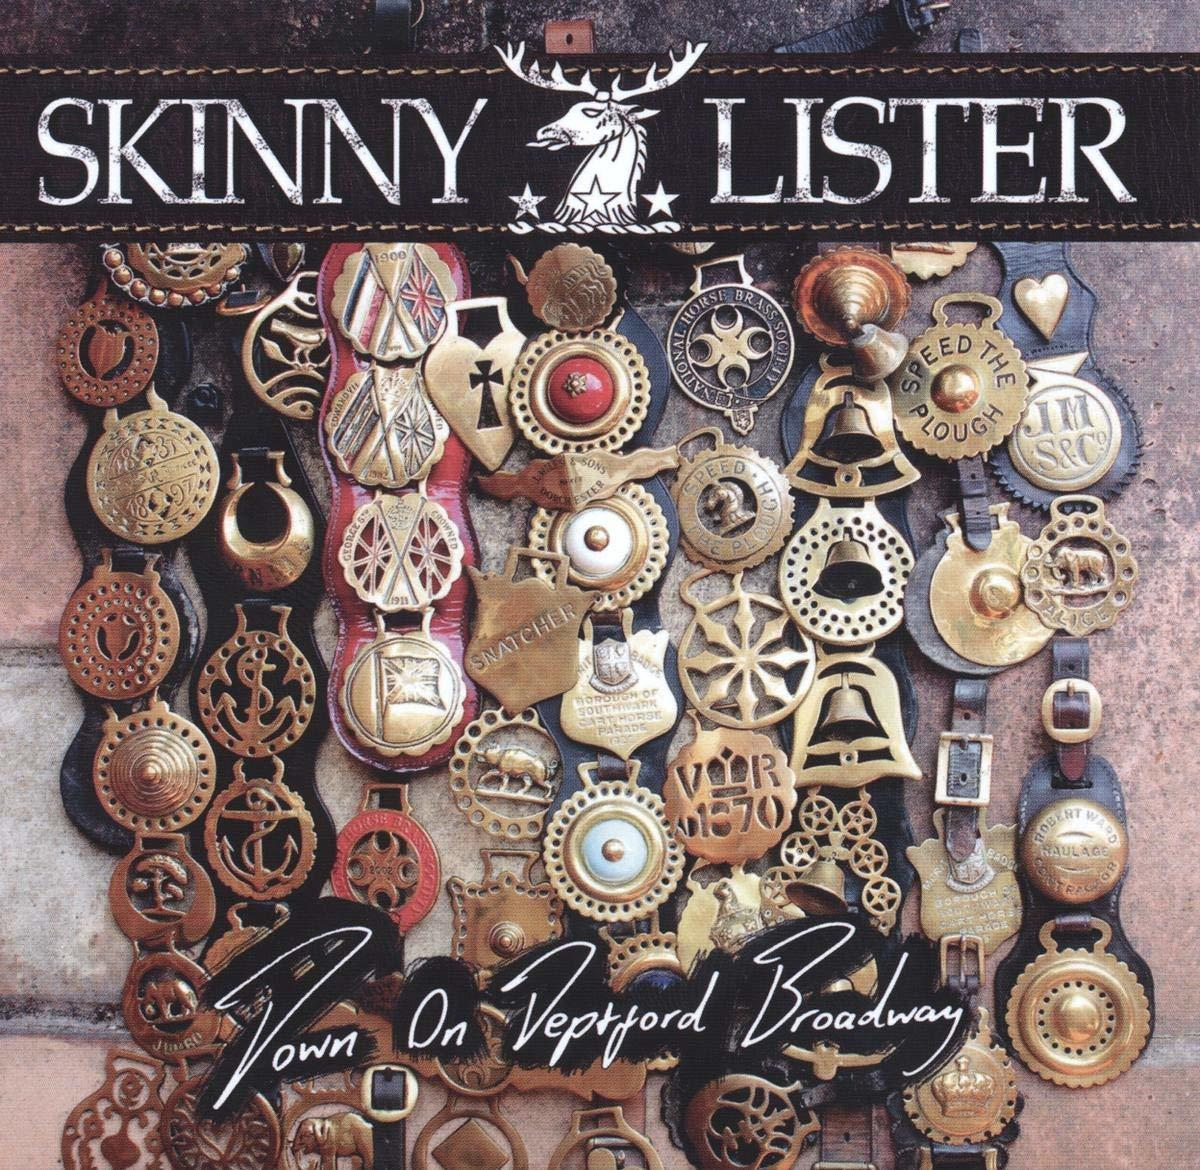 Skinny Lister - Down On Deptford Broadway-Orange (Vinyl) - Vinyl